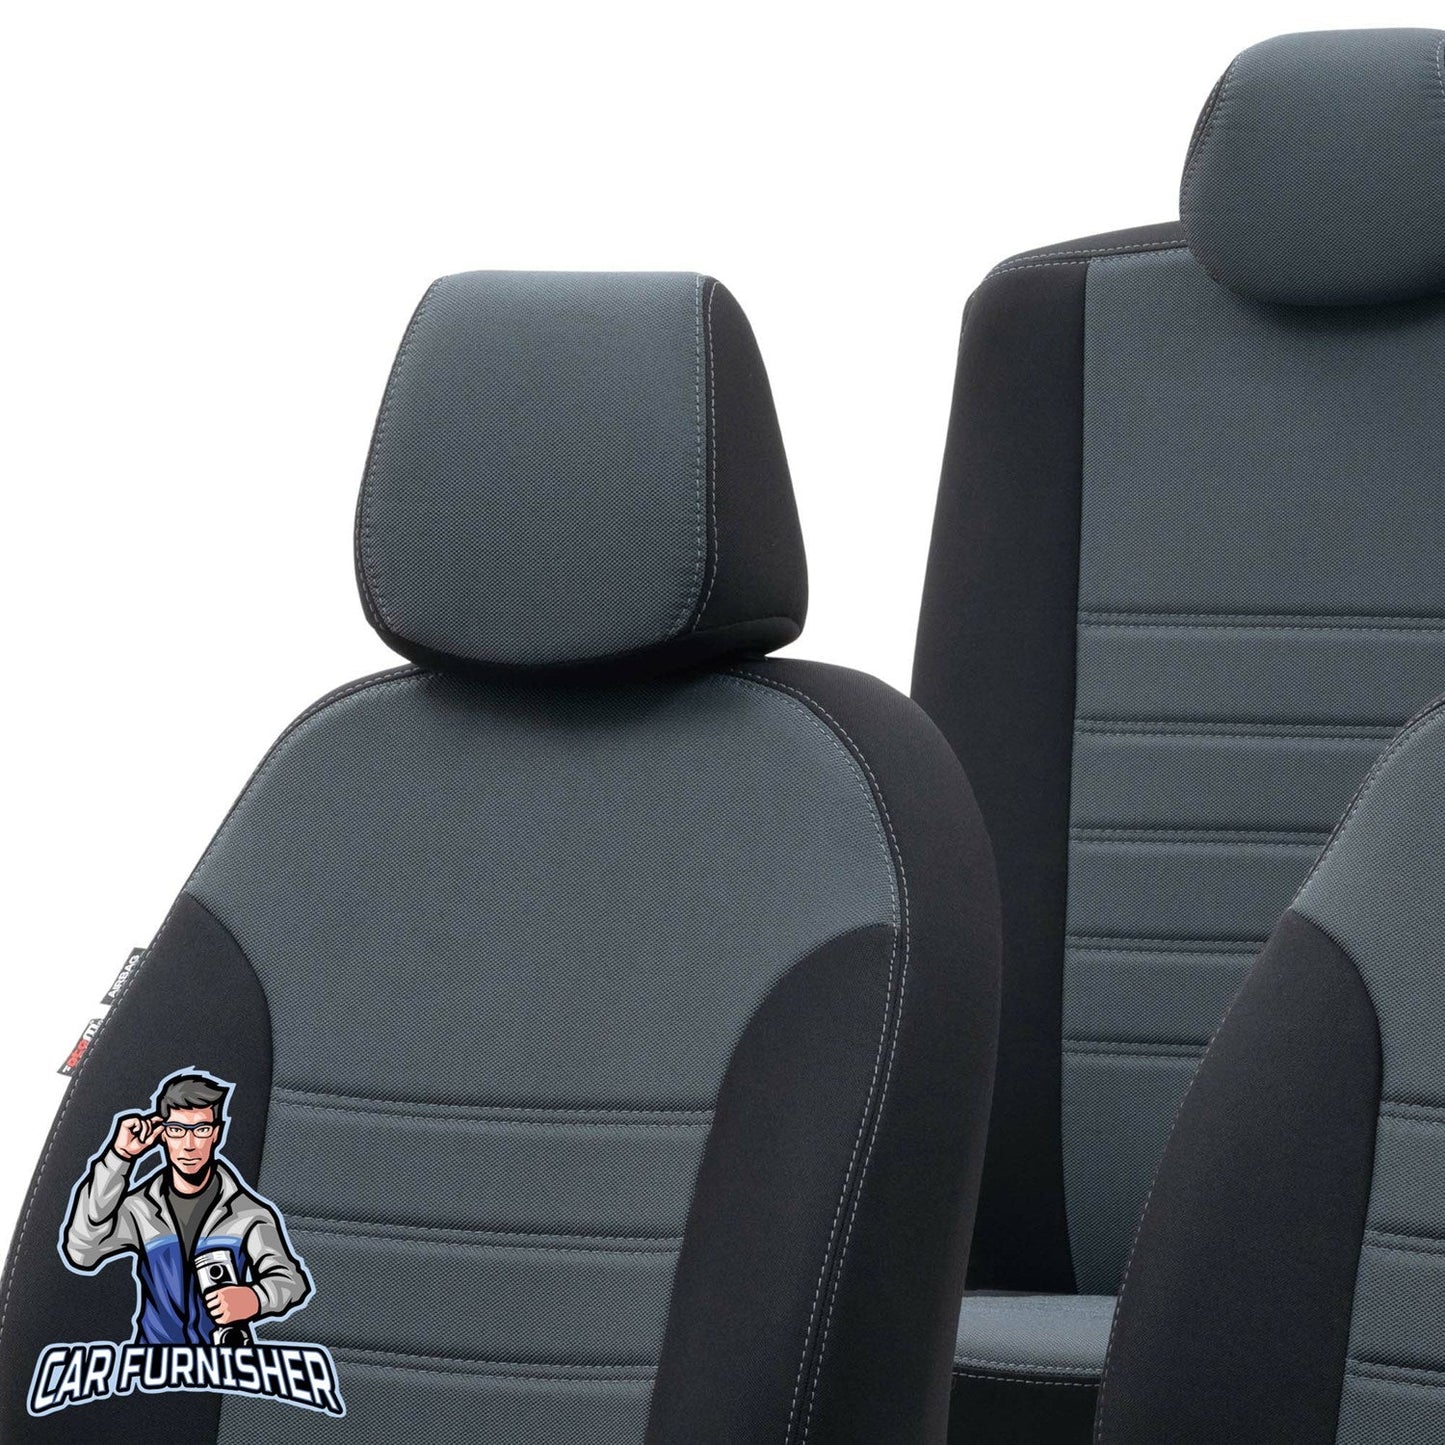 Volkswagen Scirocco Seat Cover Original Jacquard Design Dark Beige Jacquard Fabric